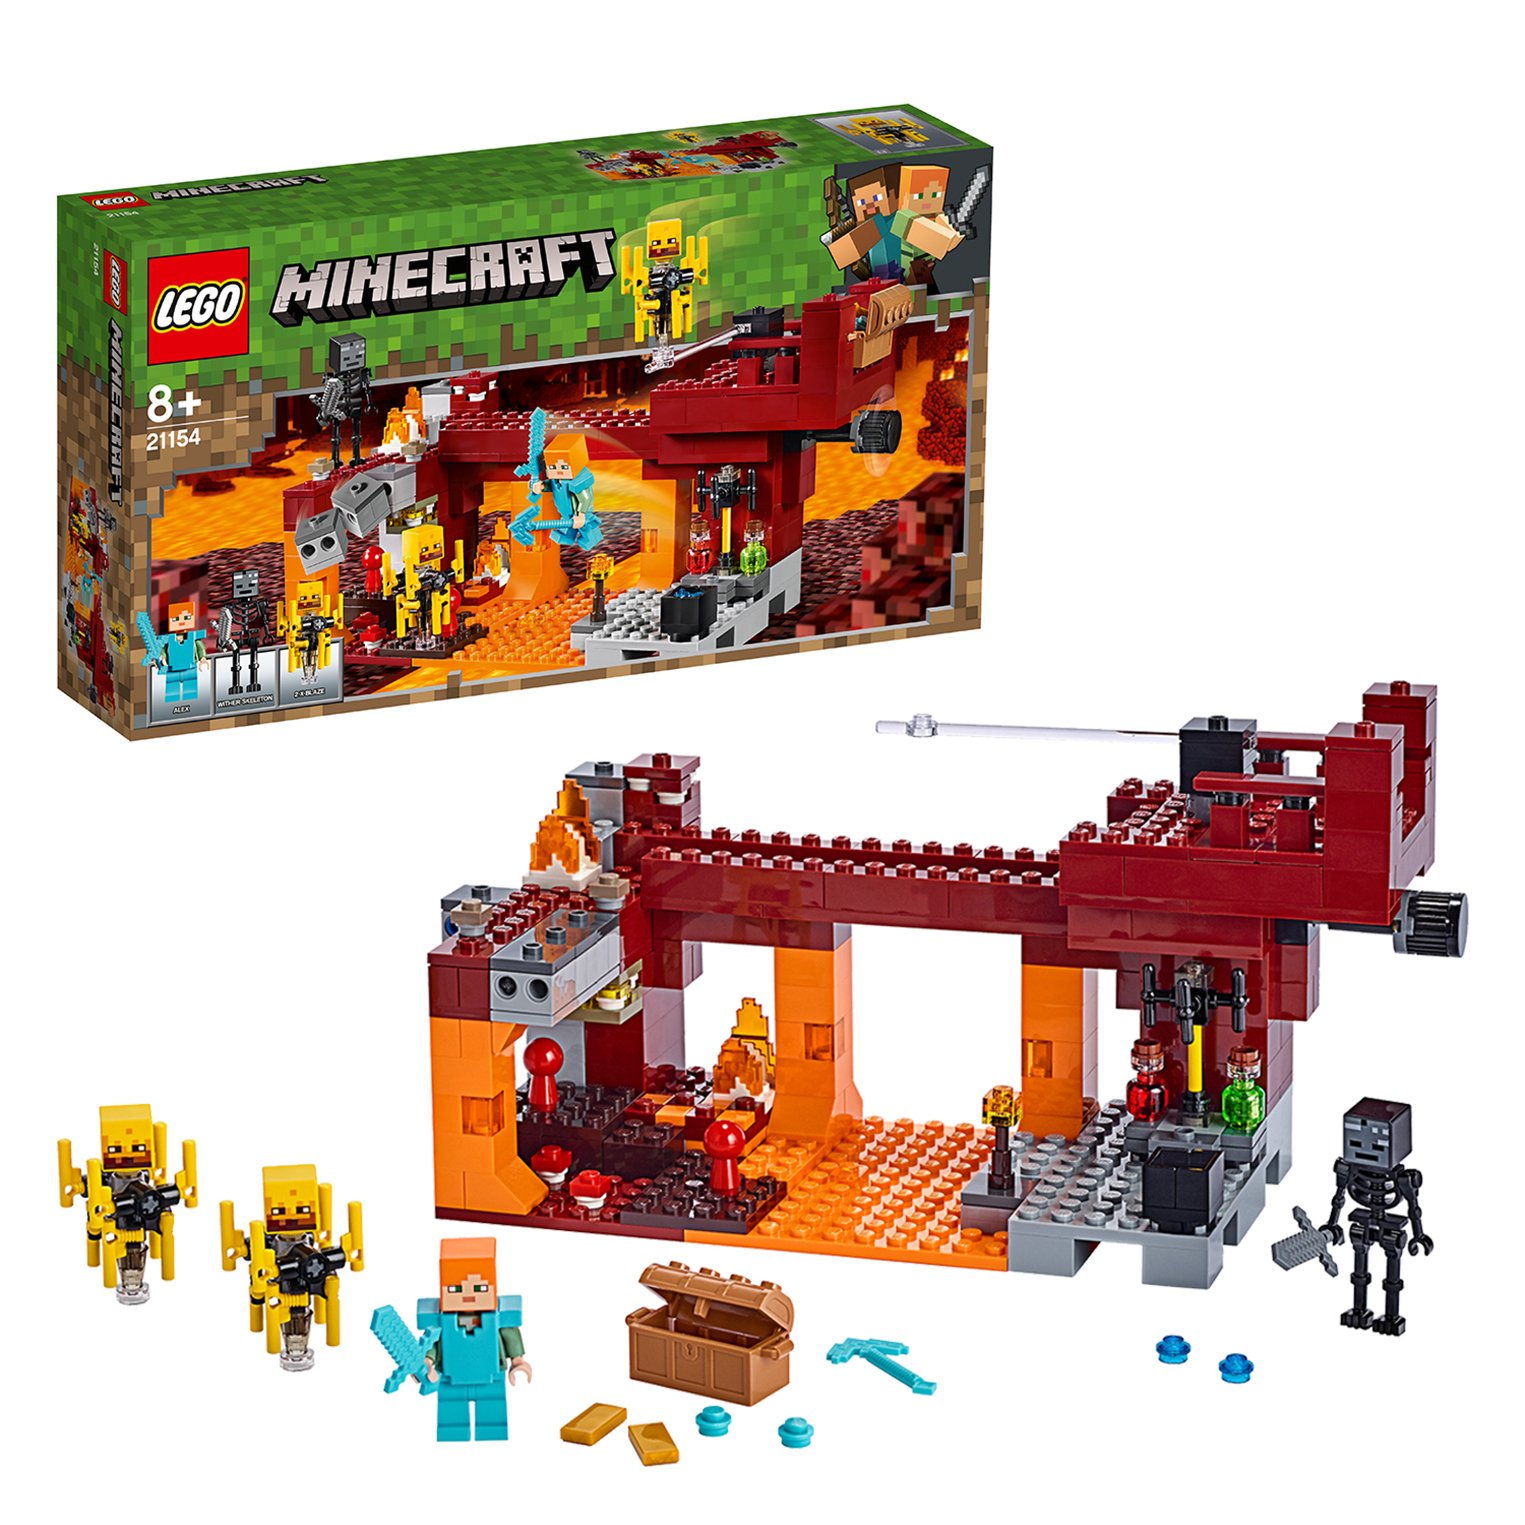 Buy LEGO Minecraft The Blaze Bridge Playset - 21154 | LEGO | Argos